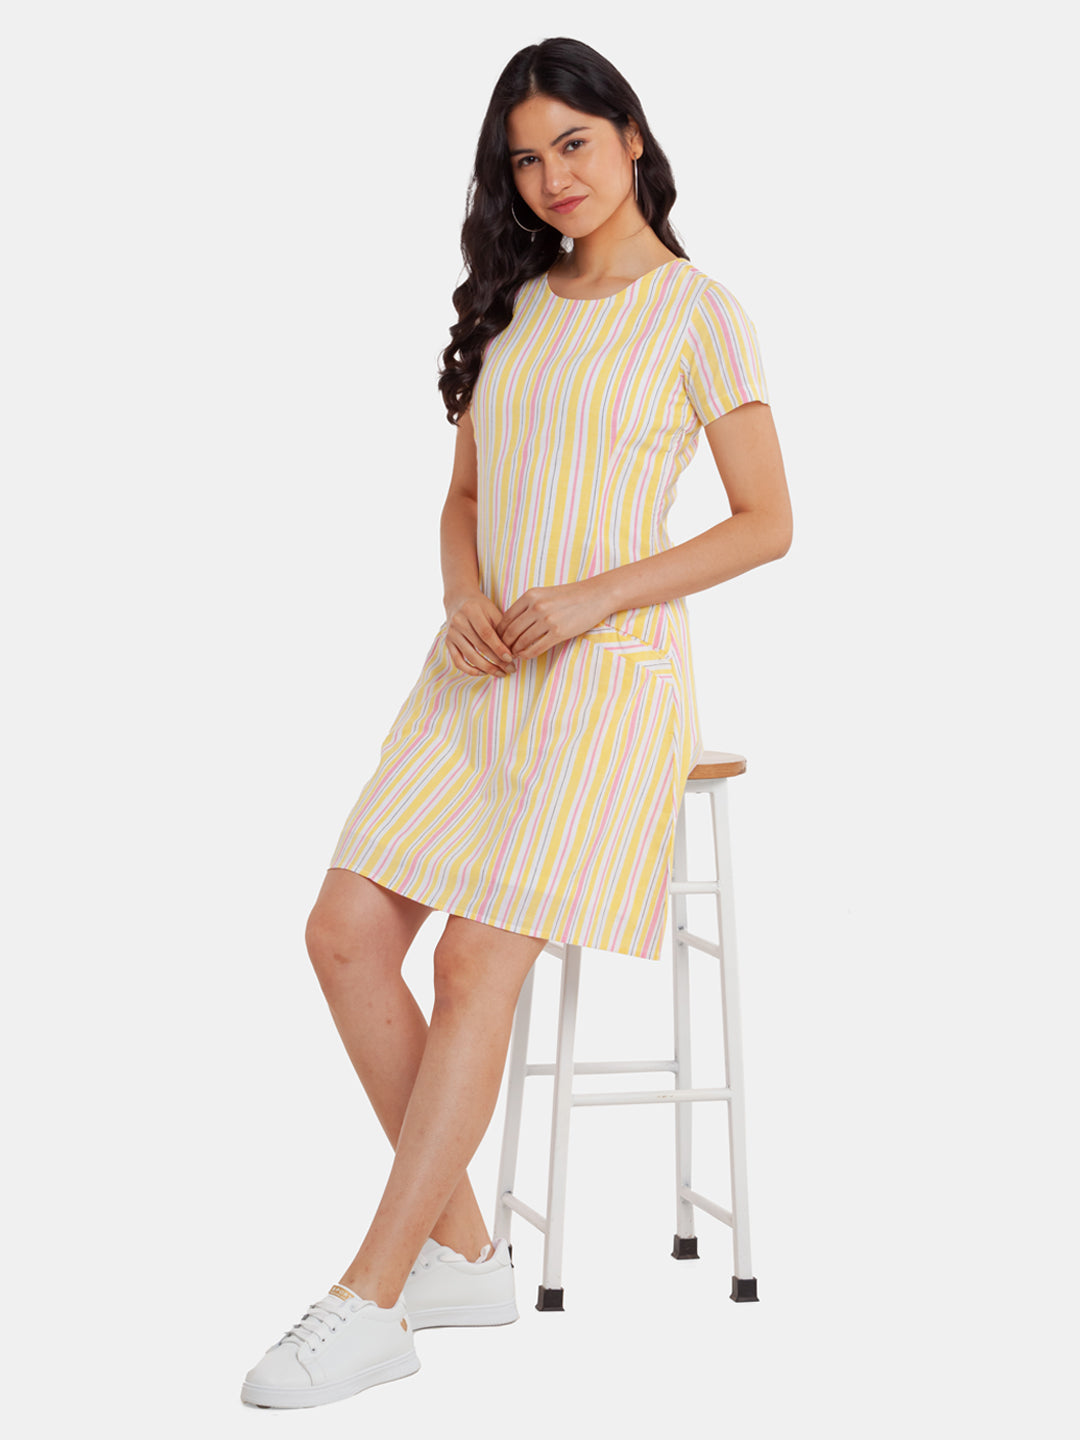 Multicolor Striped Short Dress For Women